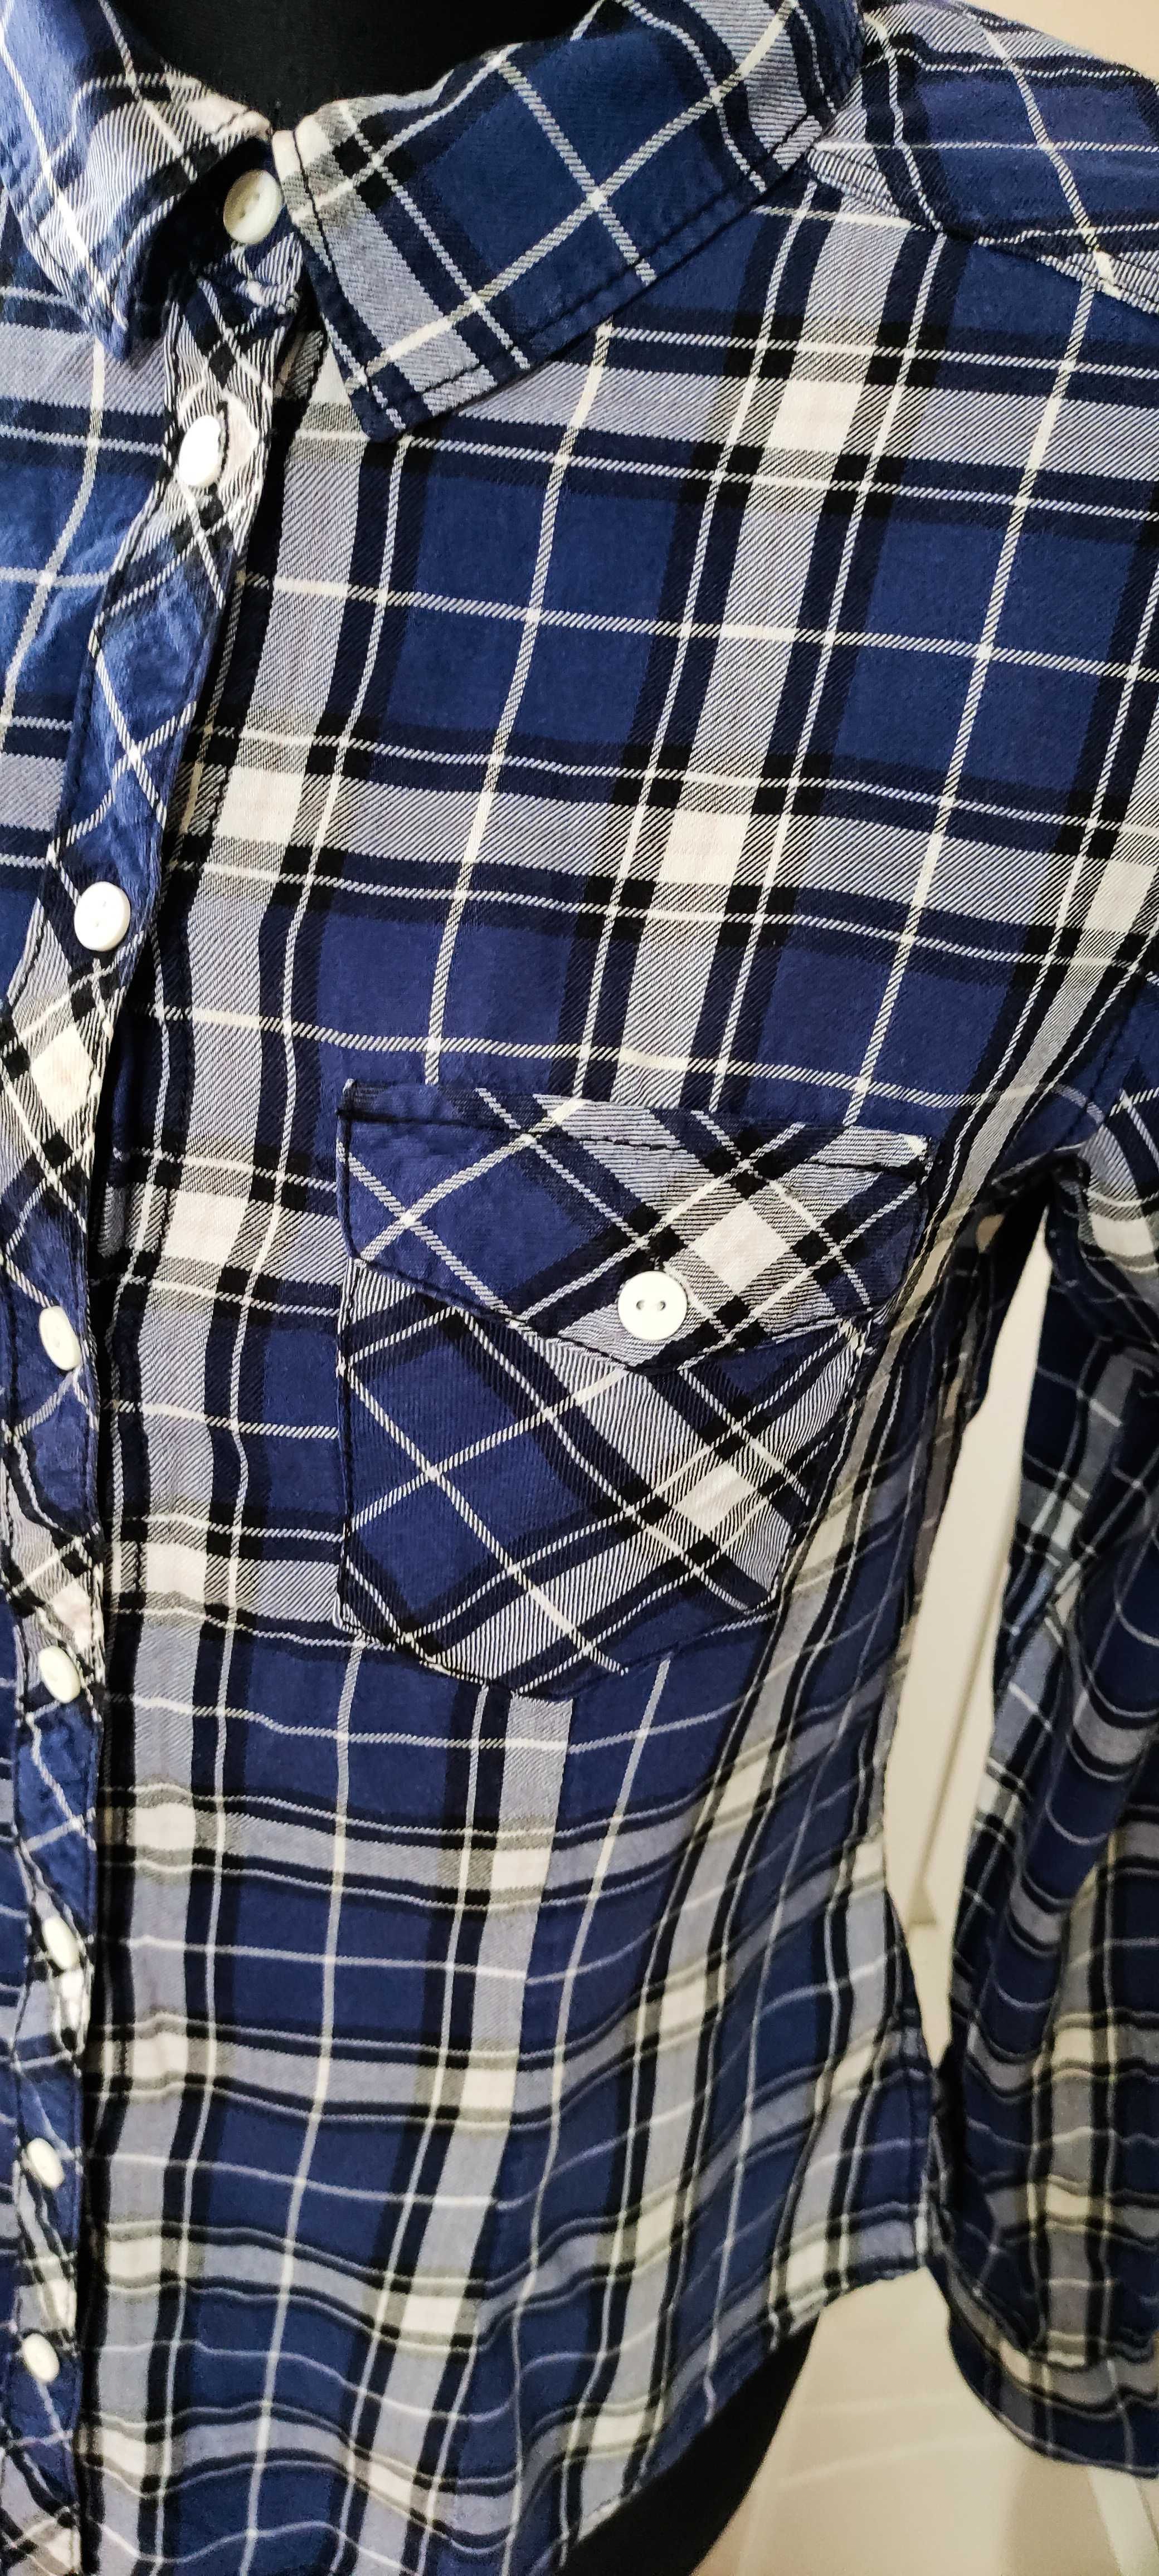 Koszula H&M Divided granat niebieska biała czarna bawełna w kratę